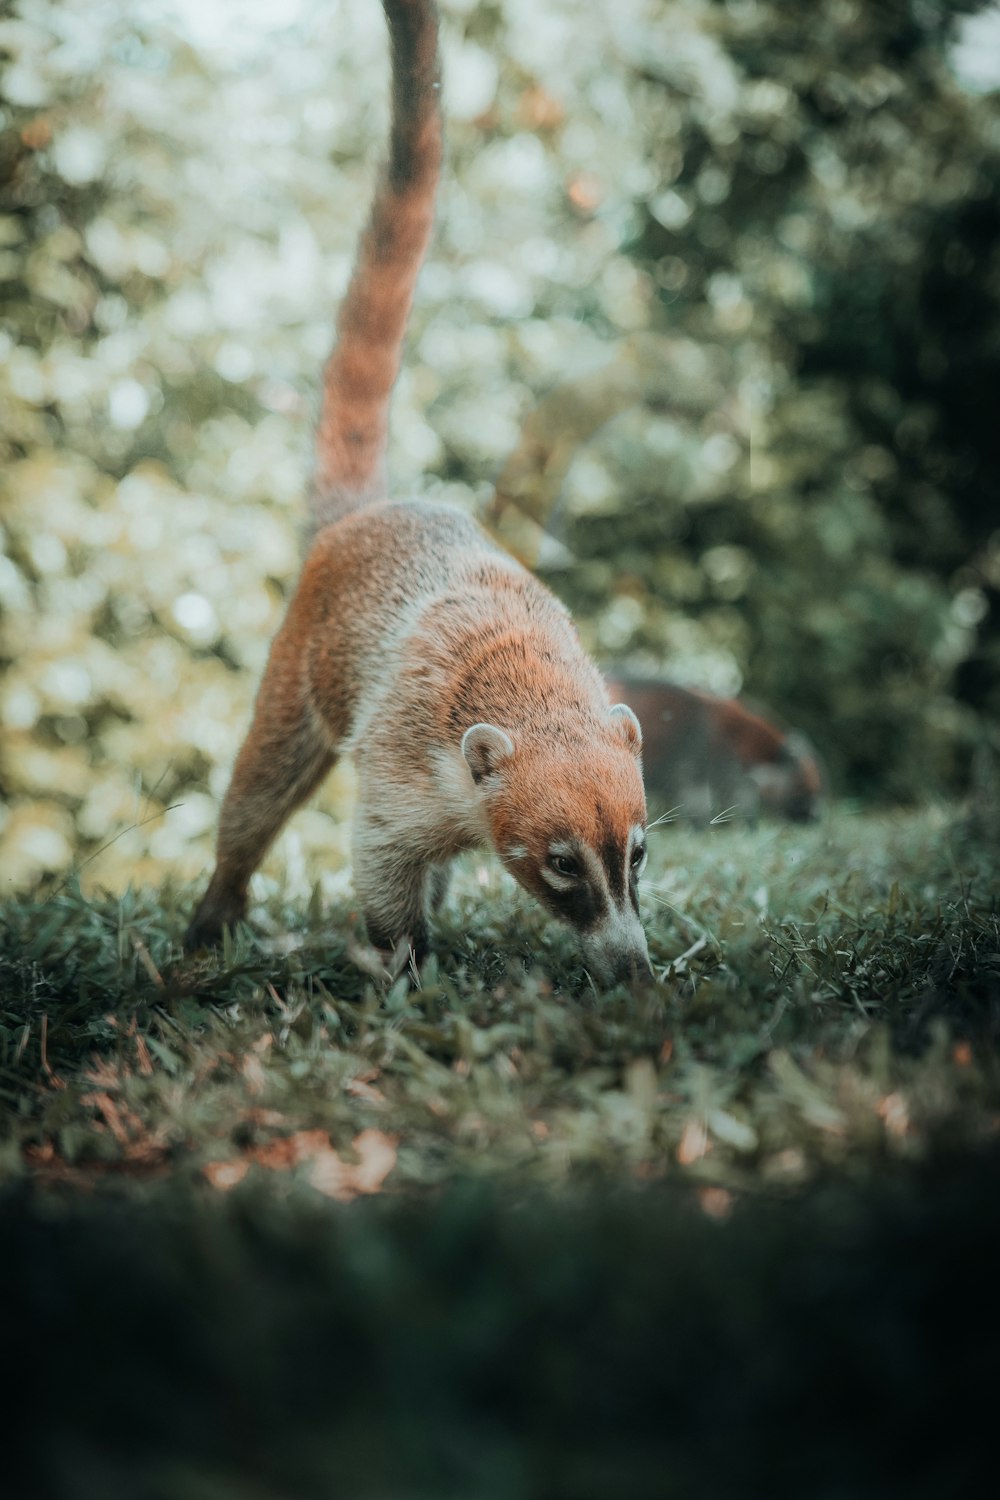 a small animal walking across a lush green field